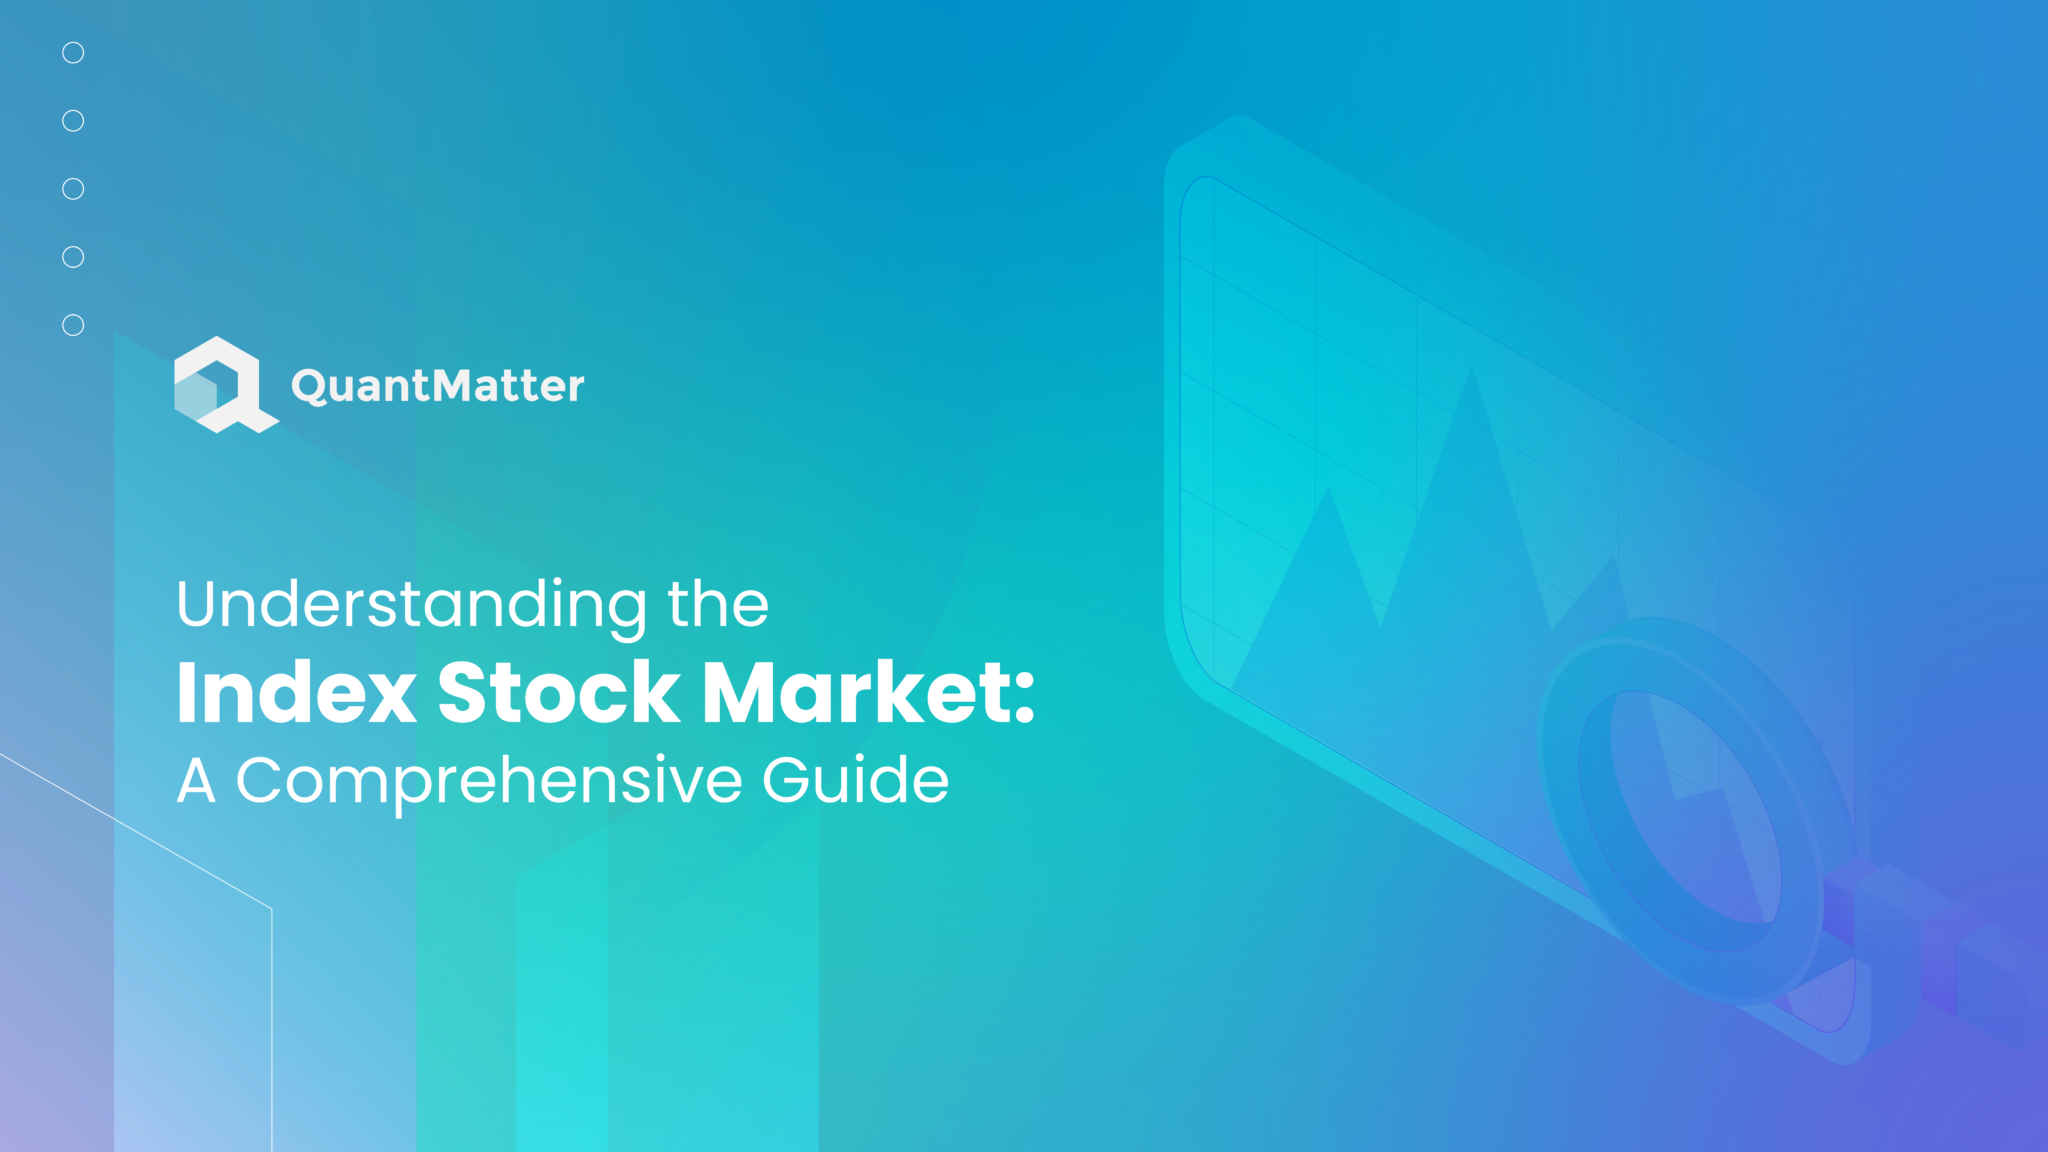 Index Stock Market: A Comprehensive Guide